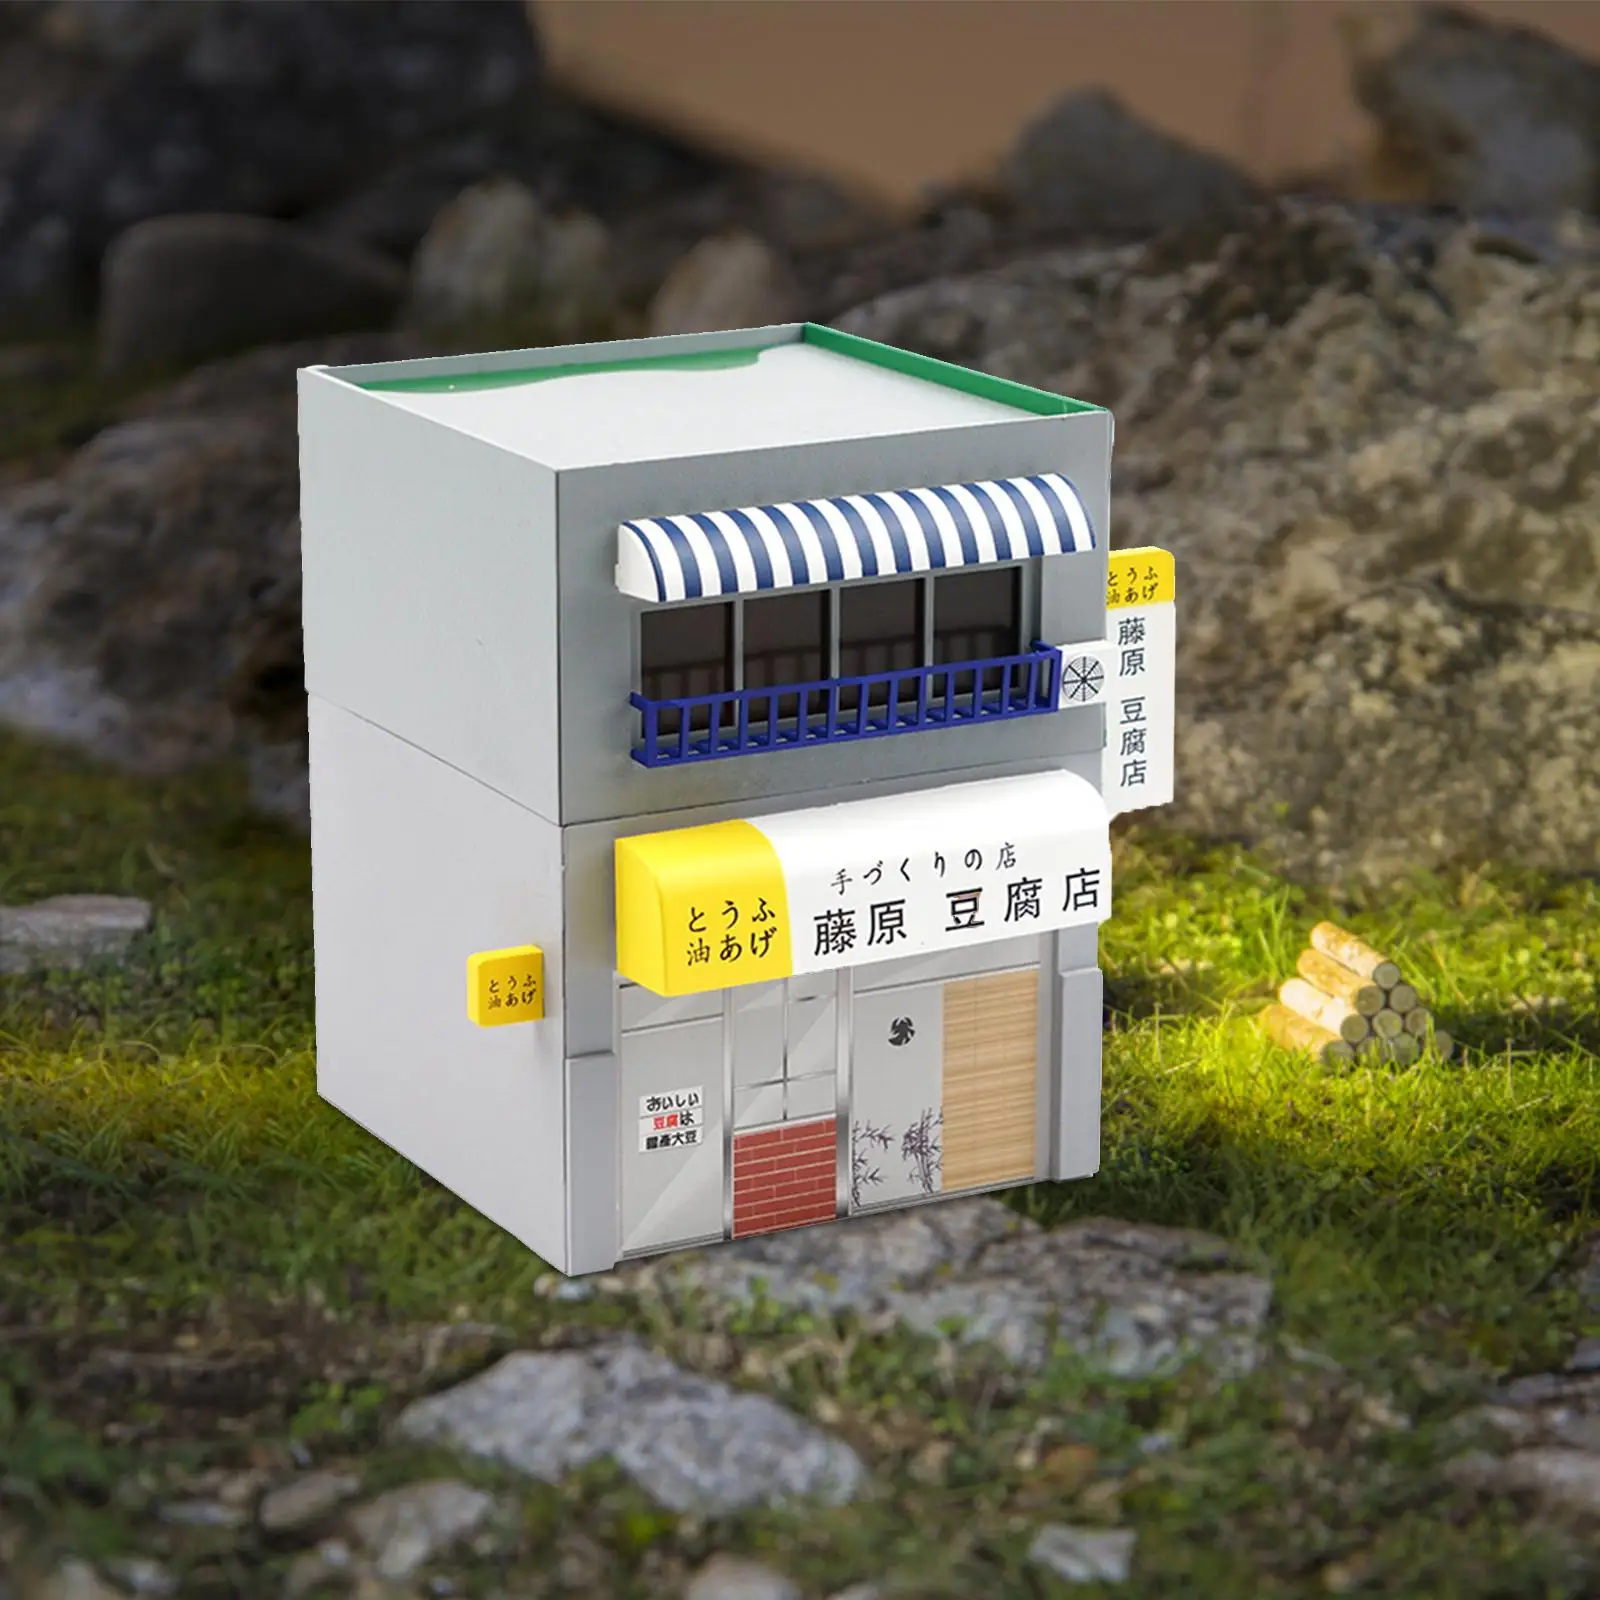 1/64 Tofu Shop Diorama Model Architectural Micro Landscape S Scale Desktop Collection Scenery Store DIY Projects Scenery Decor